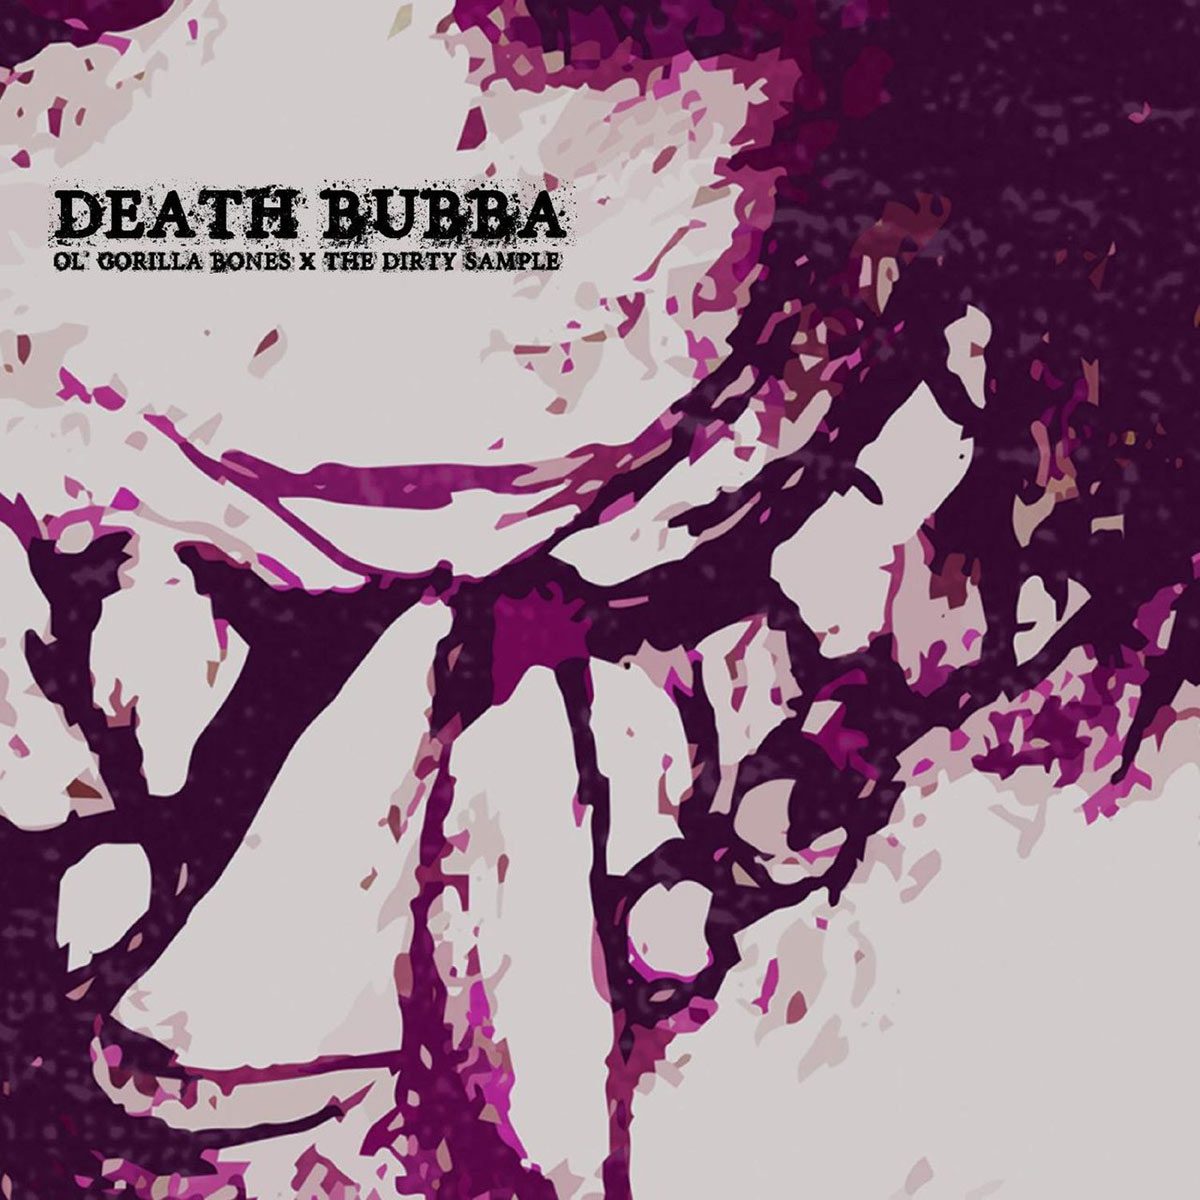 Death Bubba: Ol’ Gorilla Bones & The Dirty Sample preview Revenge Vol. 1 with new single